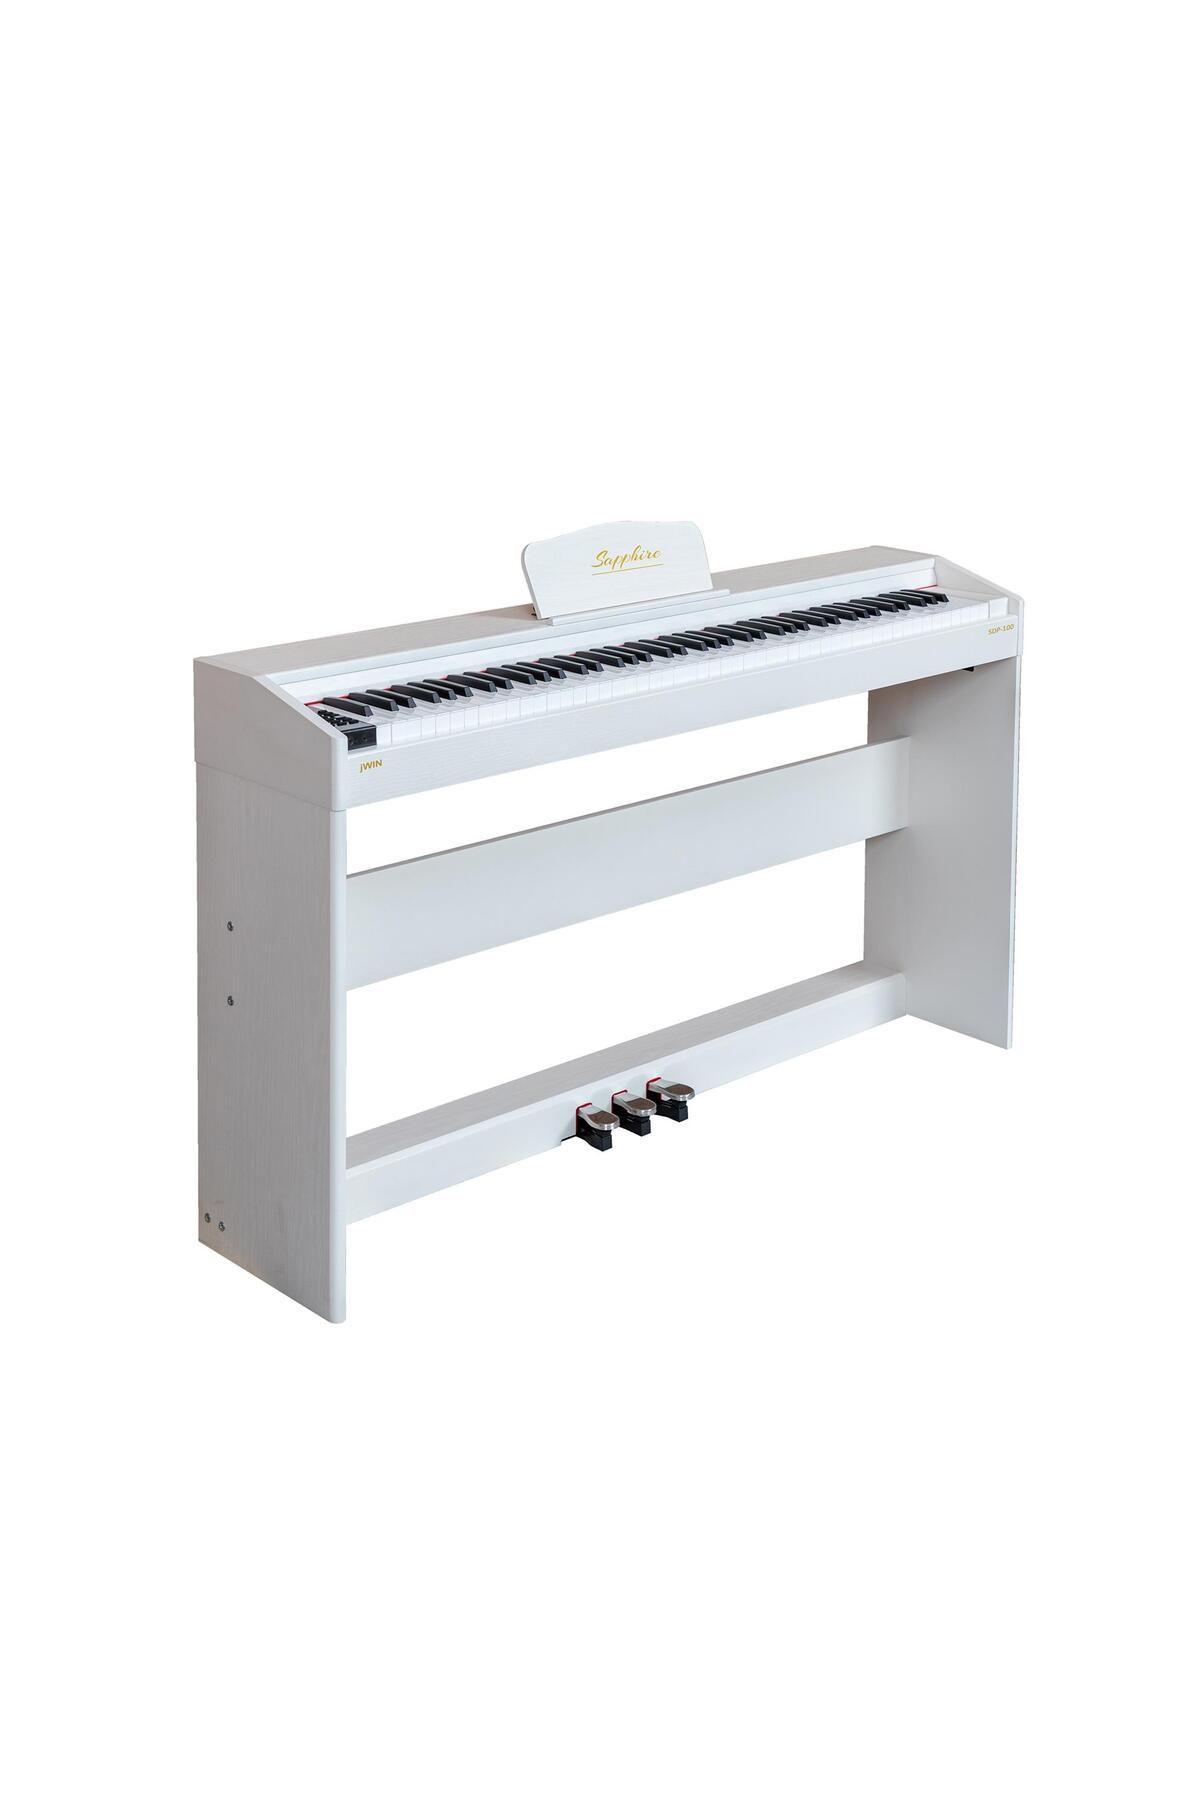 JWIN Sapphire Sdp-100 Tuş Hassasiyetli 88 Tuşlu Dijital Piyano - Beyaz